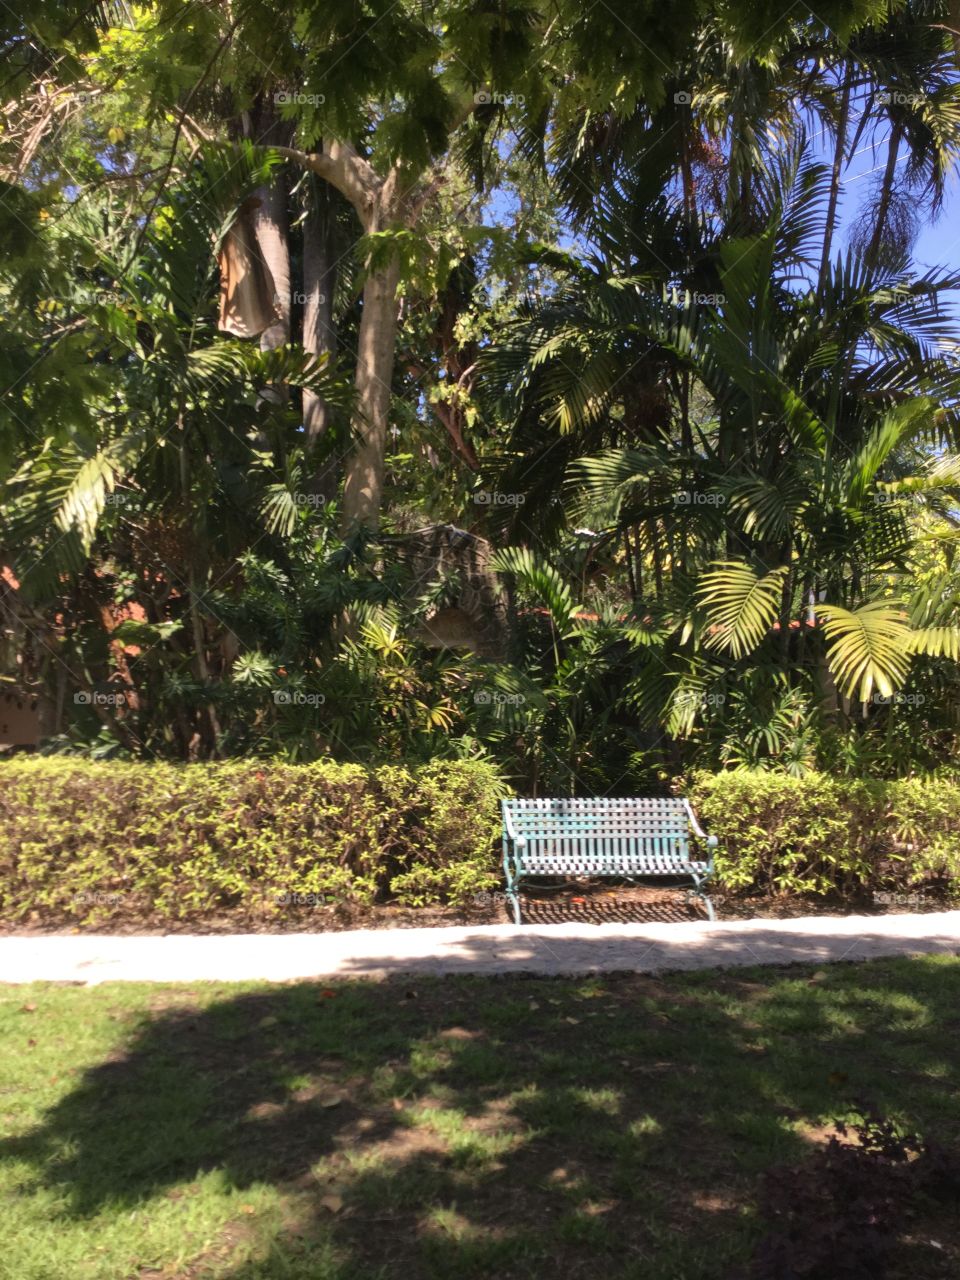 "Bench". Coconut Grove. FL